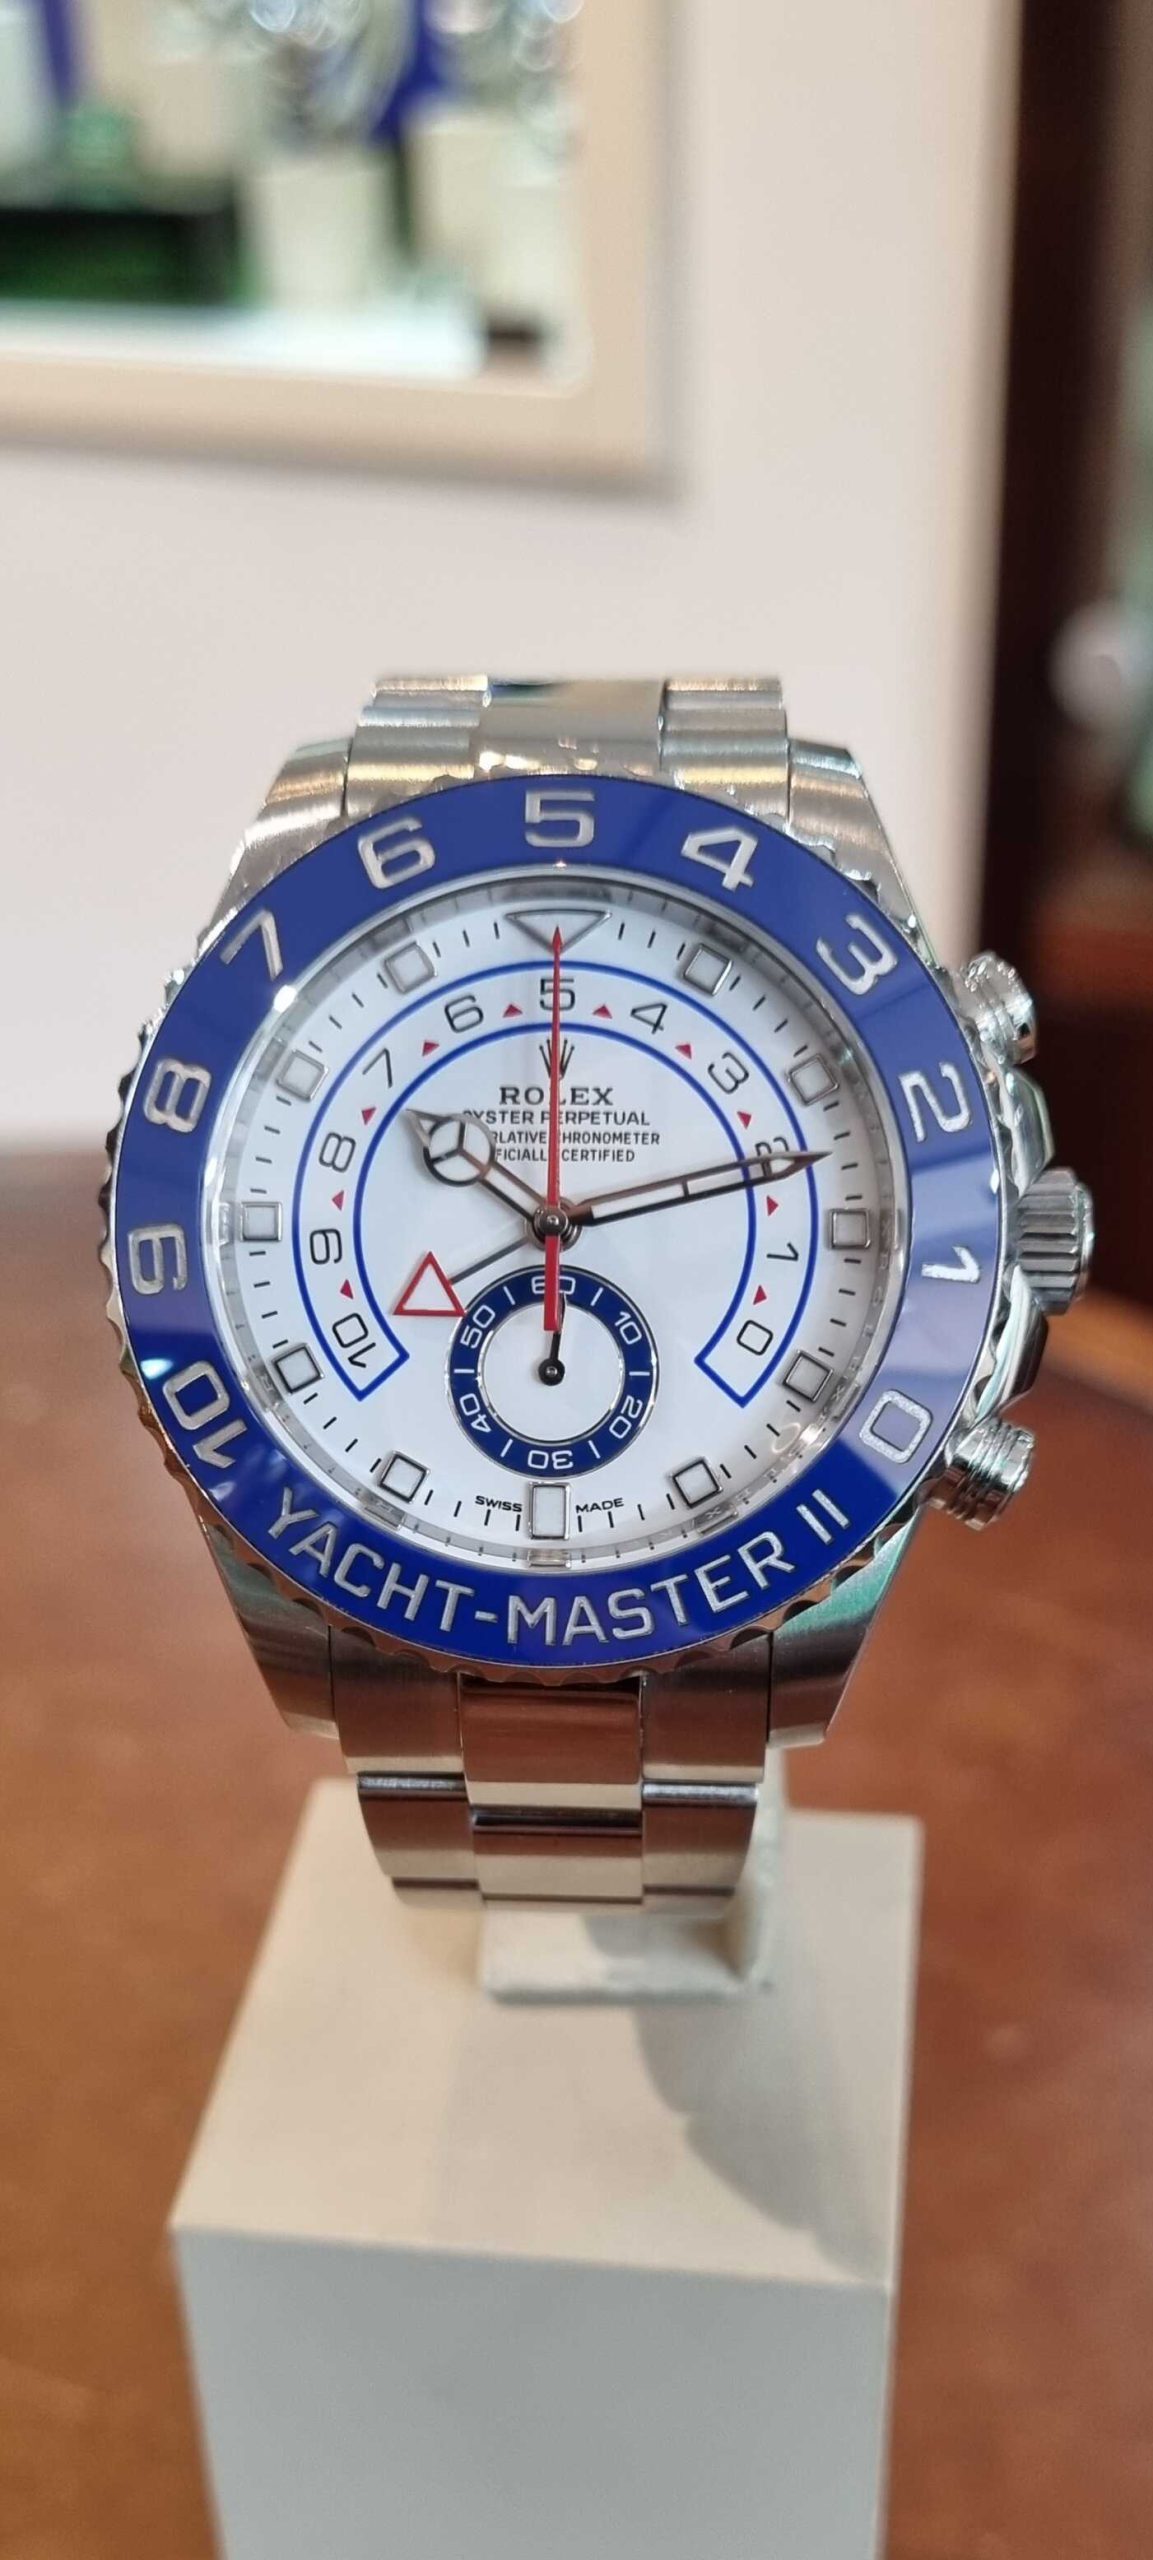 Rolex Yacht Master 40mm Platinum & Blue Dial - Gothelf A. Watches